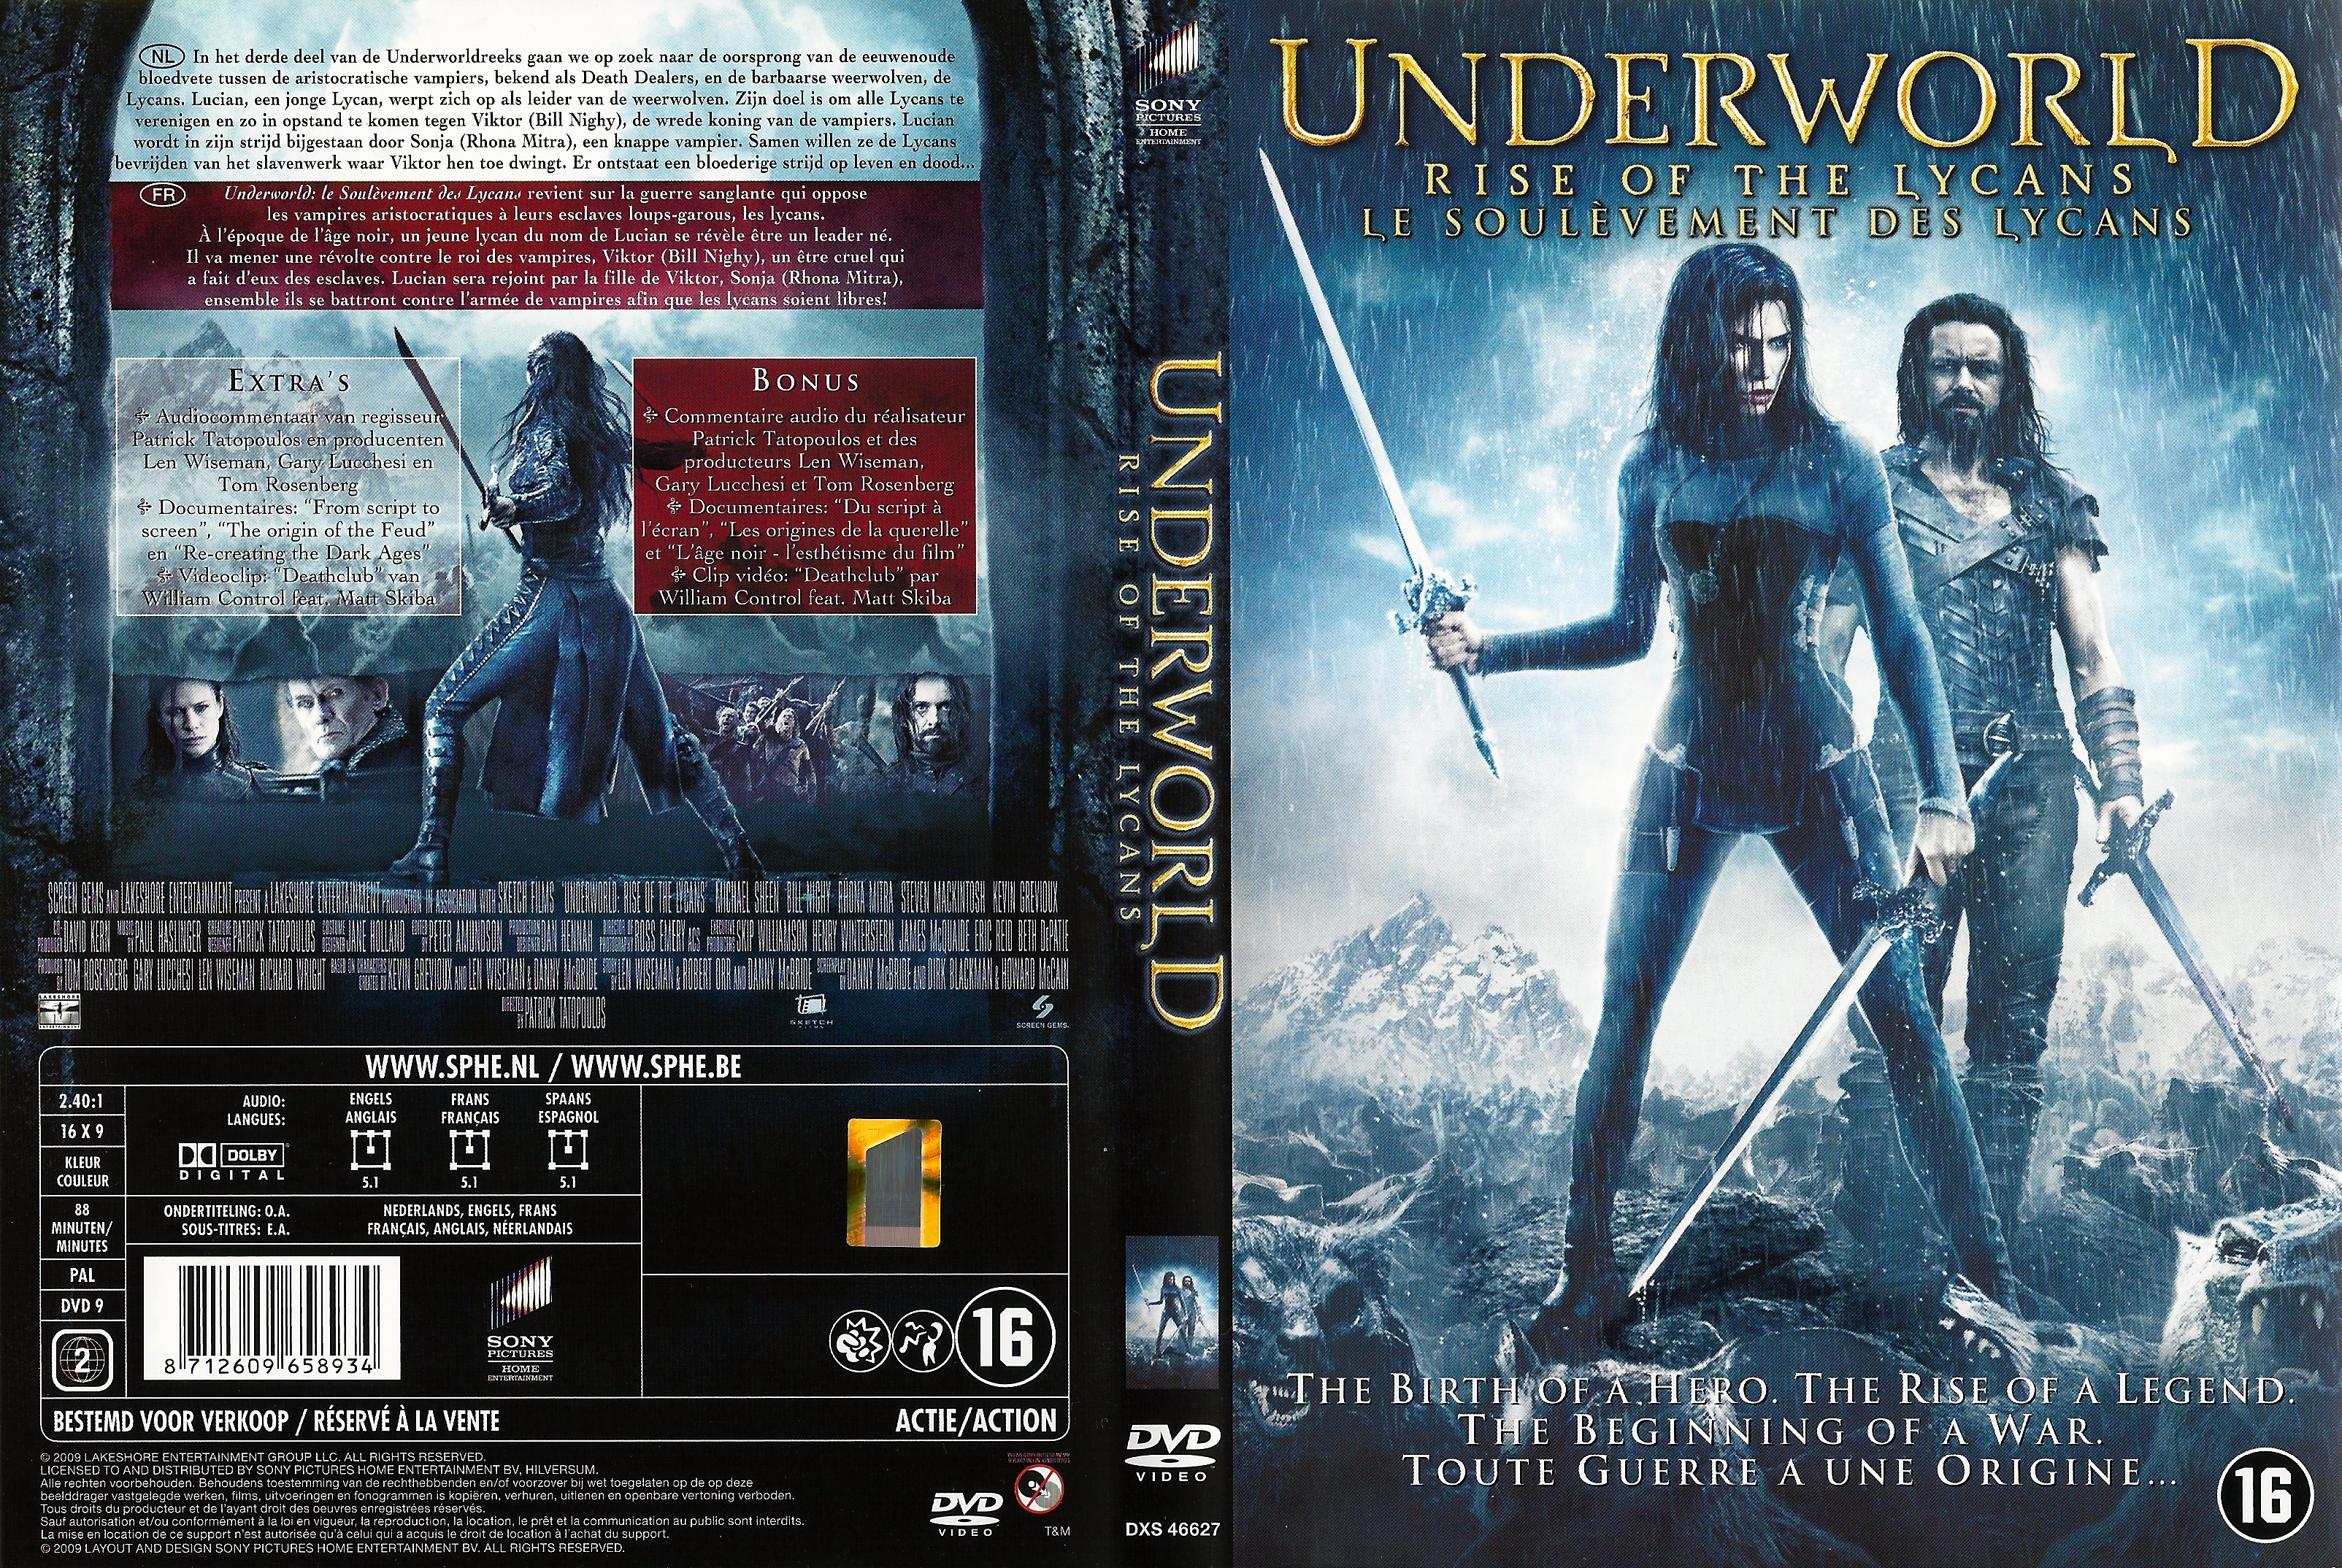 Jaquette DVD Underworld 3 v2